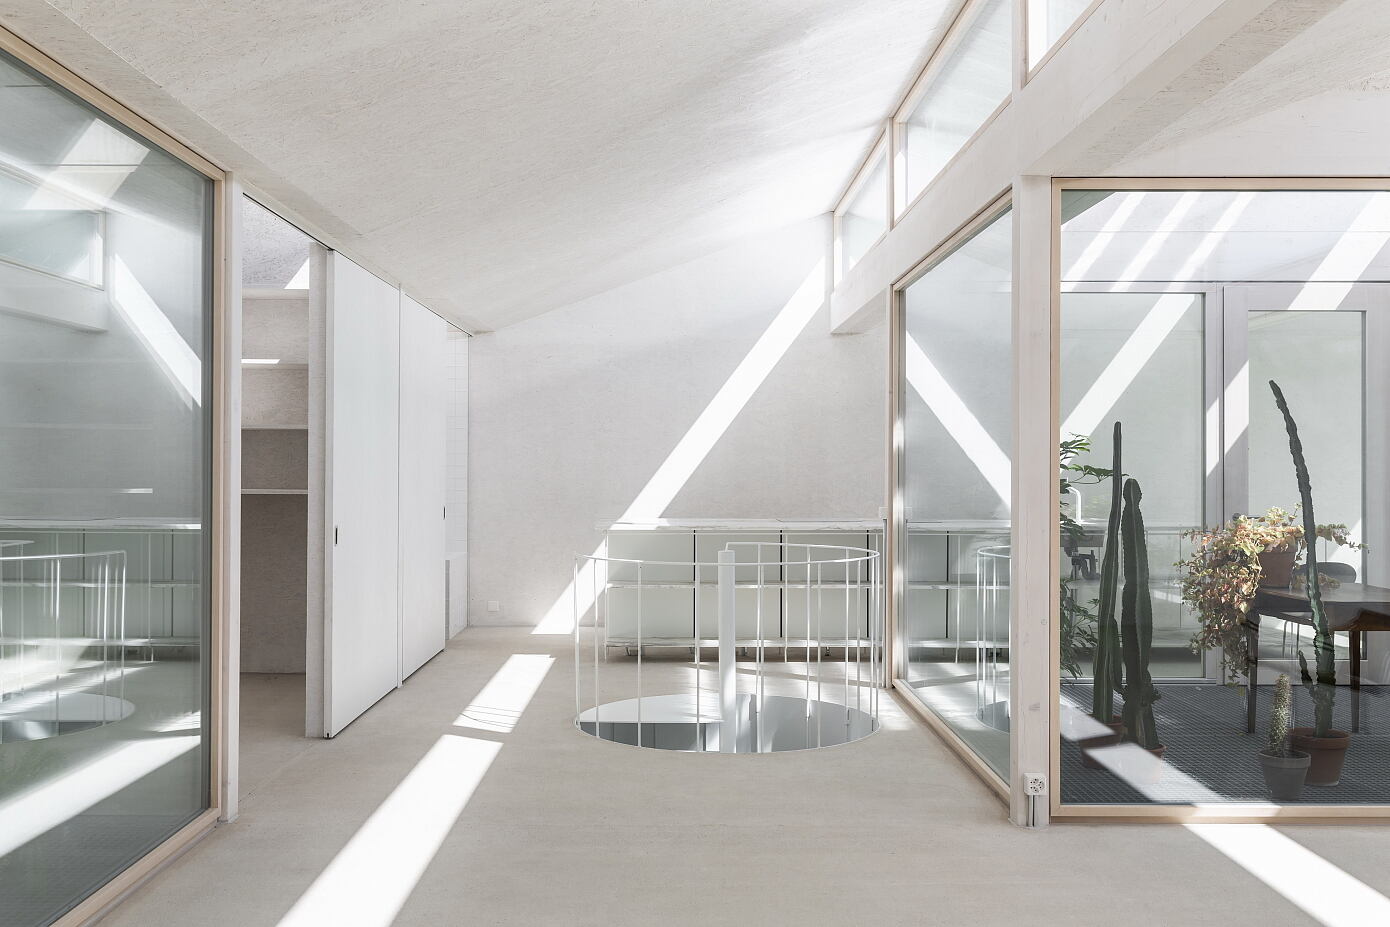 Casa CCFF by Leopold Banchini Architects